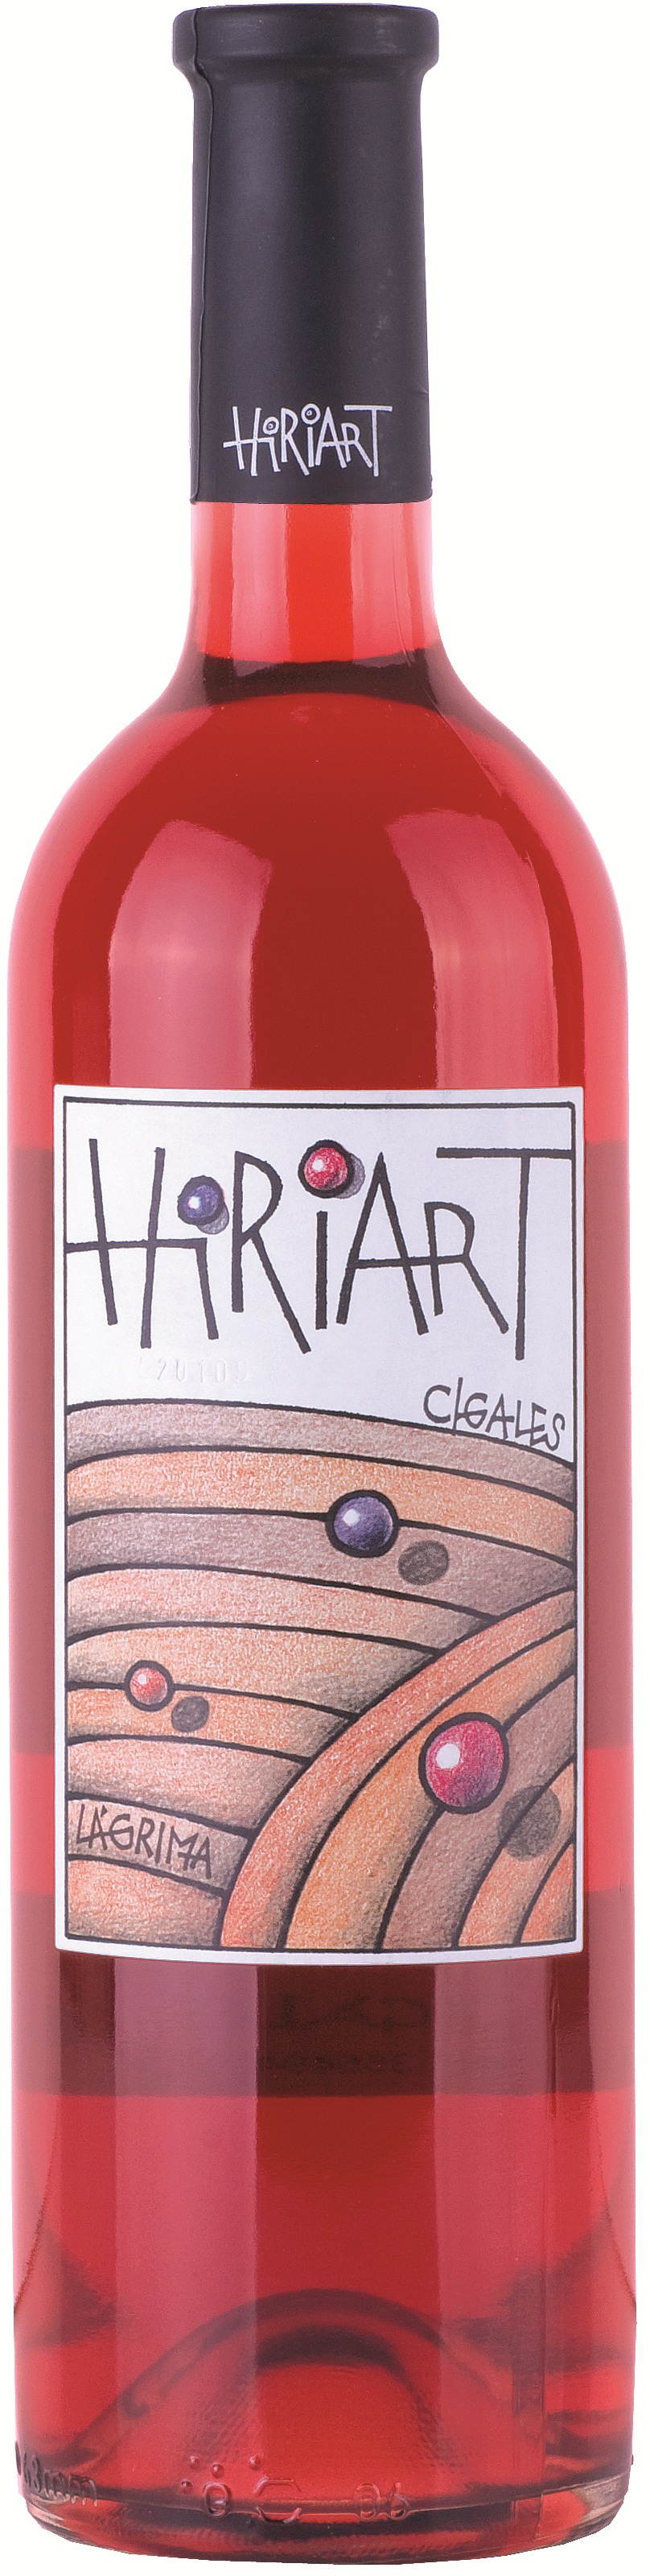 Image of Wine bottle Hiriart Rosado Lágrima